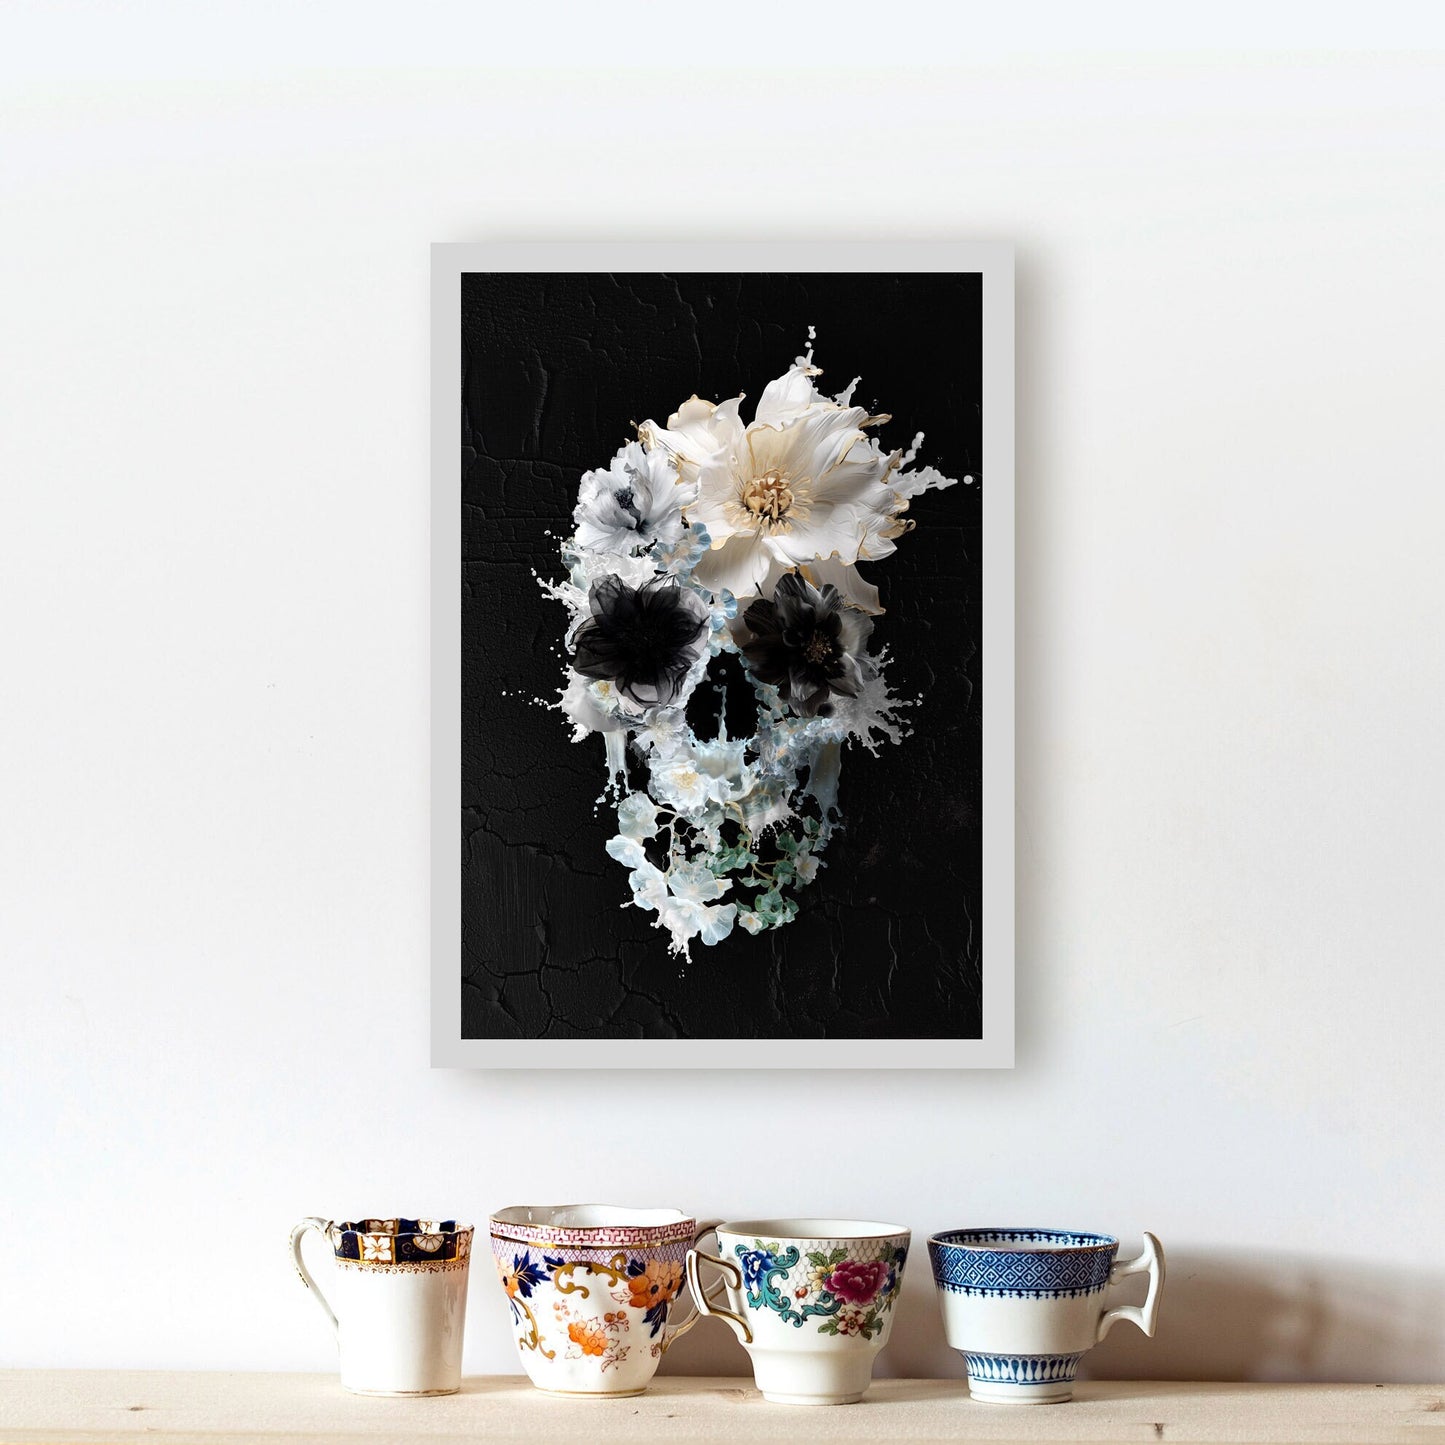 Bloom Skull Poster, Sugar Skull Art Print, Black And White Skull Wall Art, Skull Gift, Skull Illusion Home Decor, Illustration by Ali Gulec